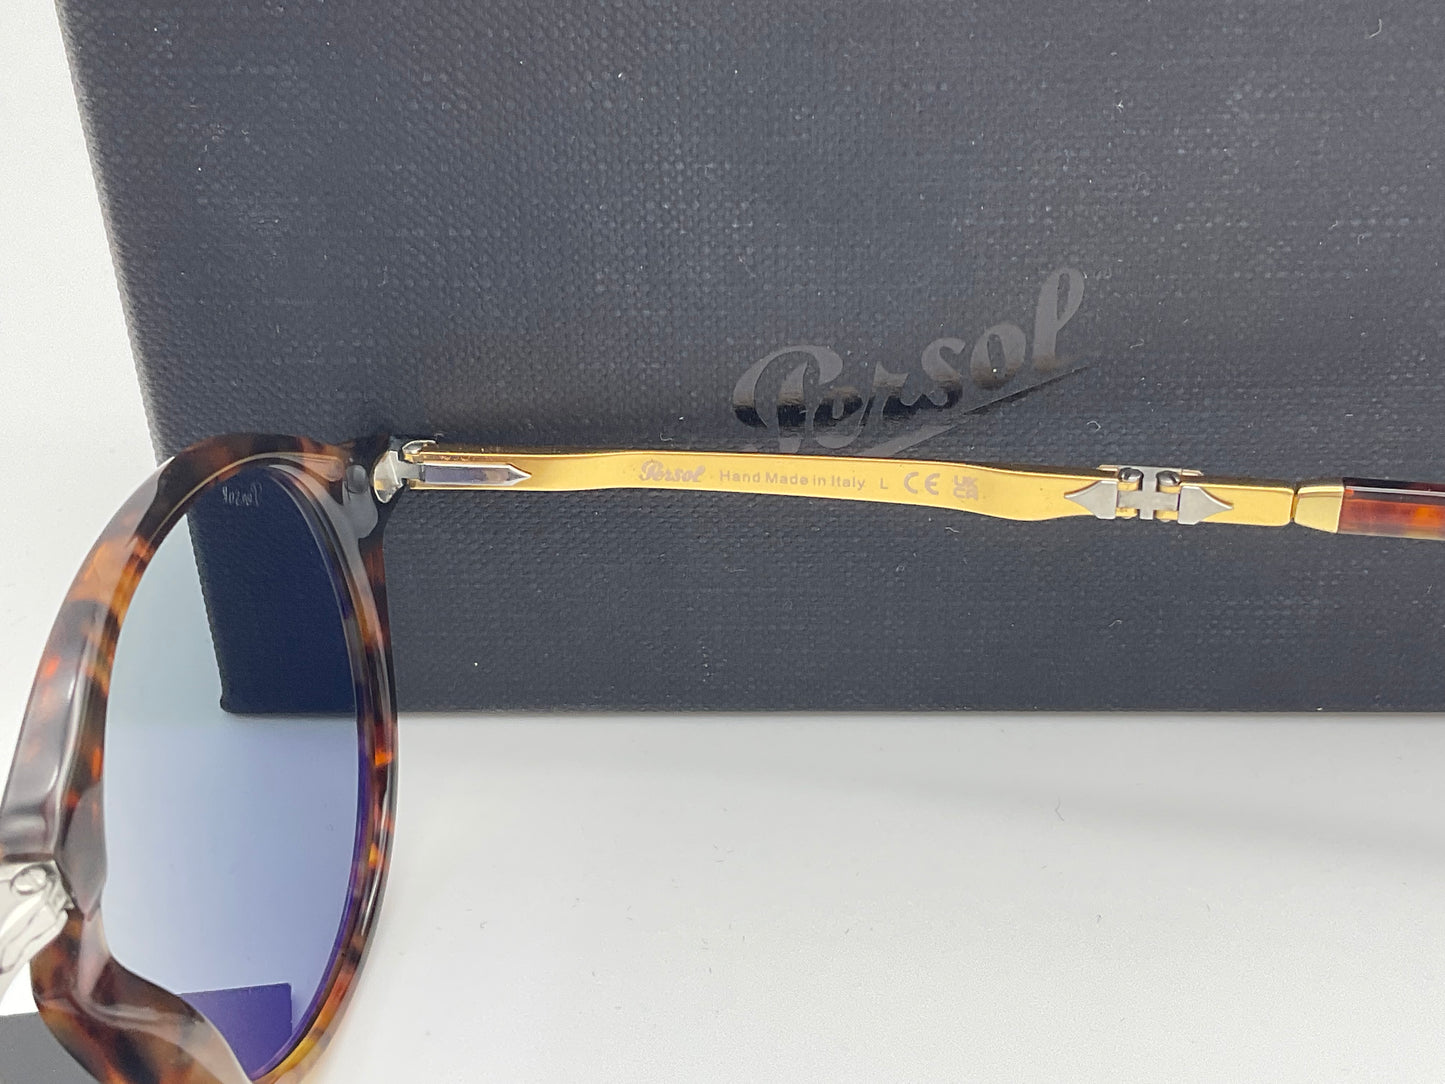 Persol PO 3274 Sunglasses Folding Round 108/56 Sunglasses Light Blue Caffe